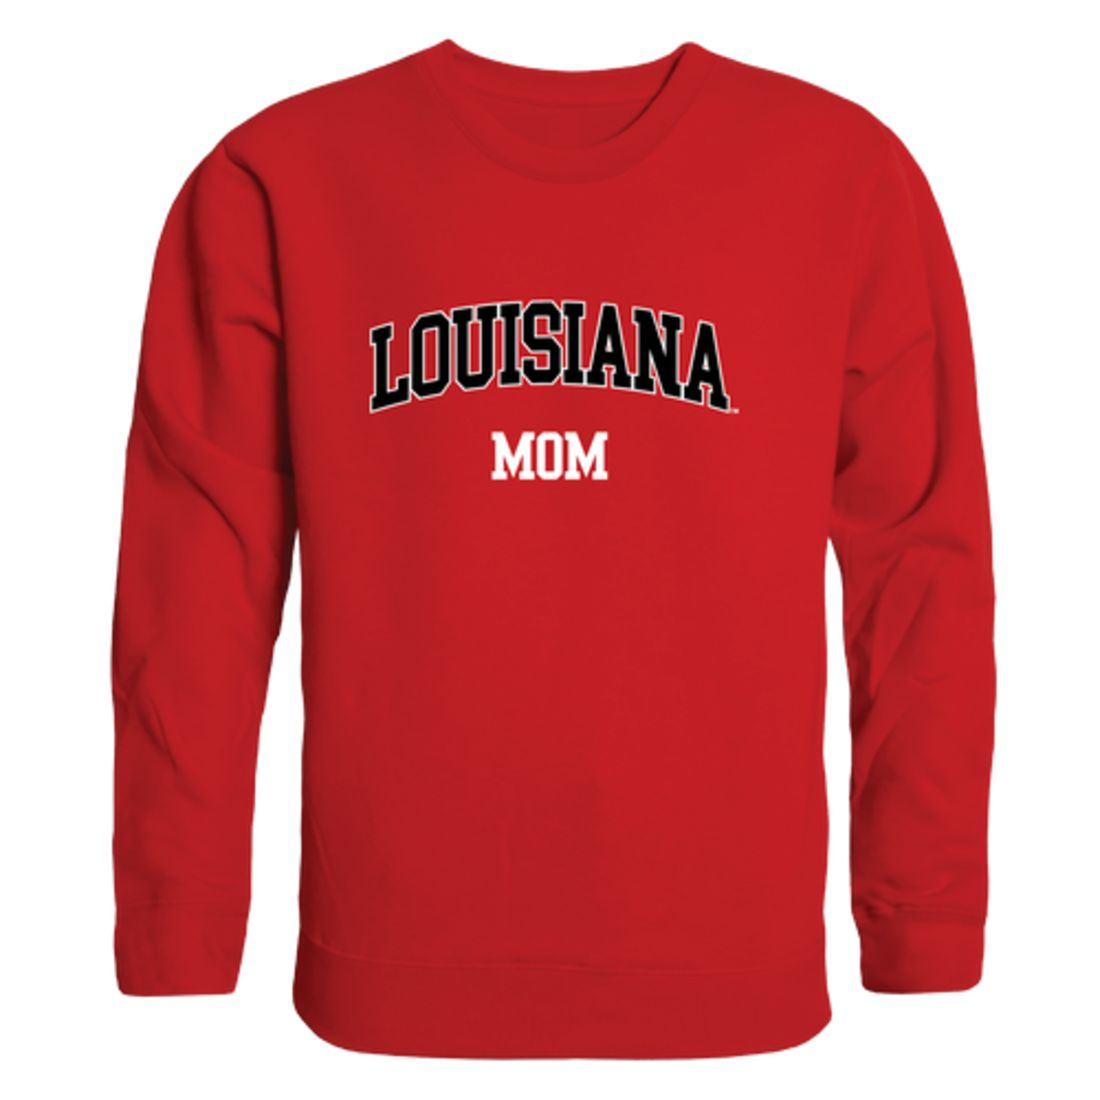 University of Louisiana at Lafayette Ragin' Cajuns Mom Crewneck Sweatshirt